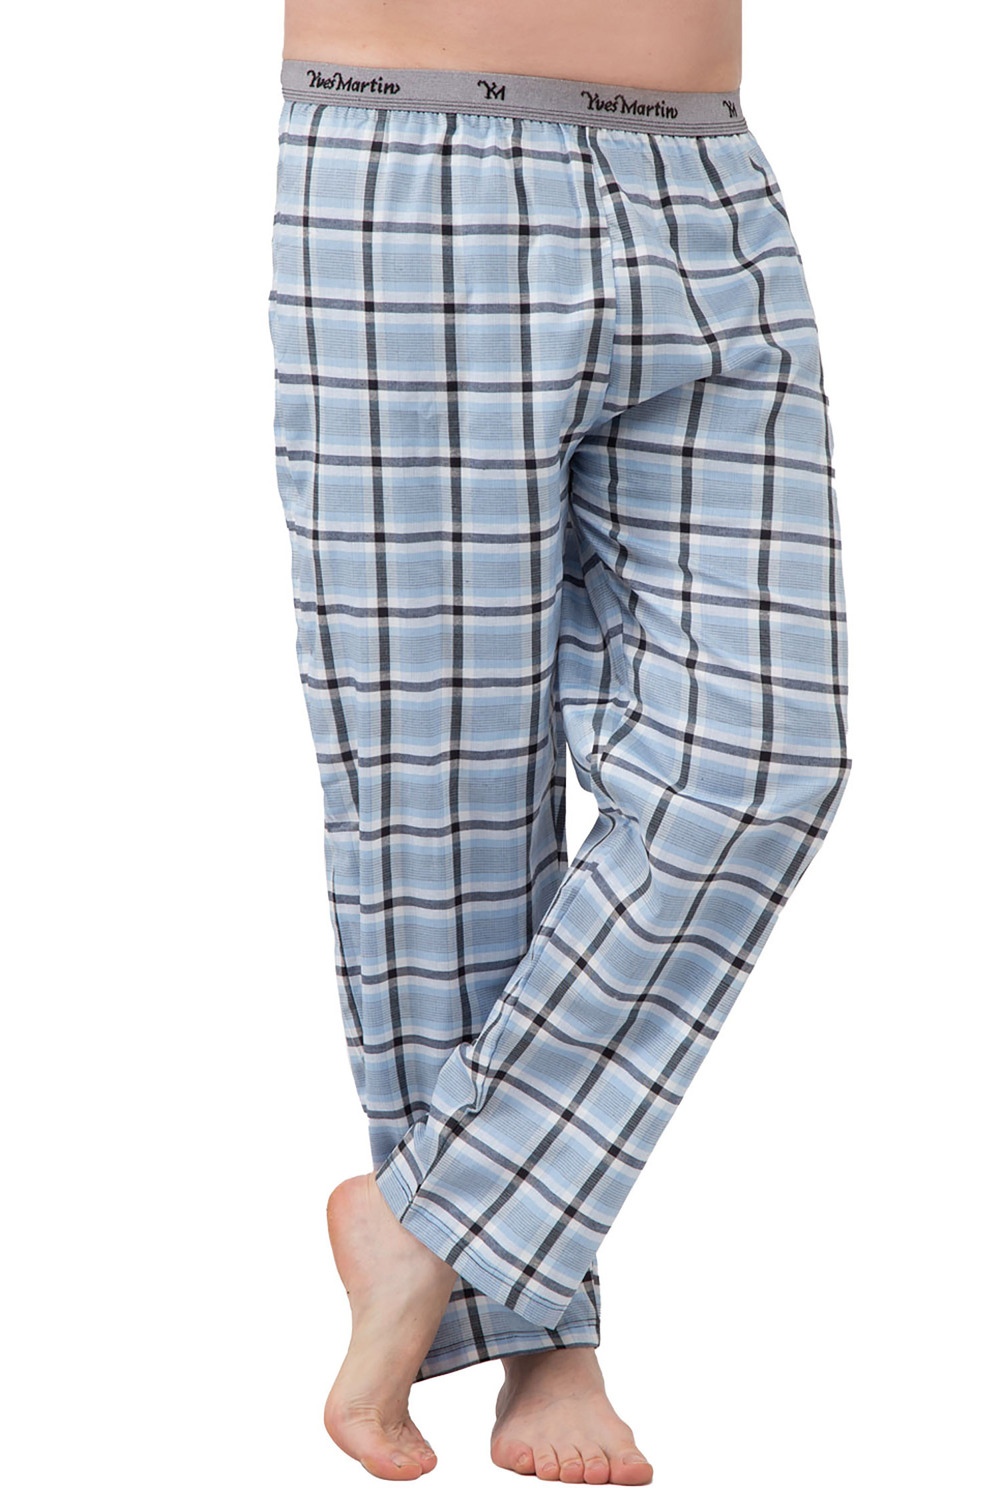 Yves Martin - Men's flannel sleep pants, blue plaid, medium (M)